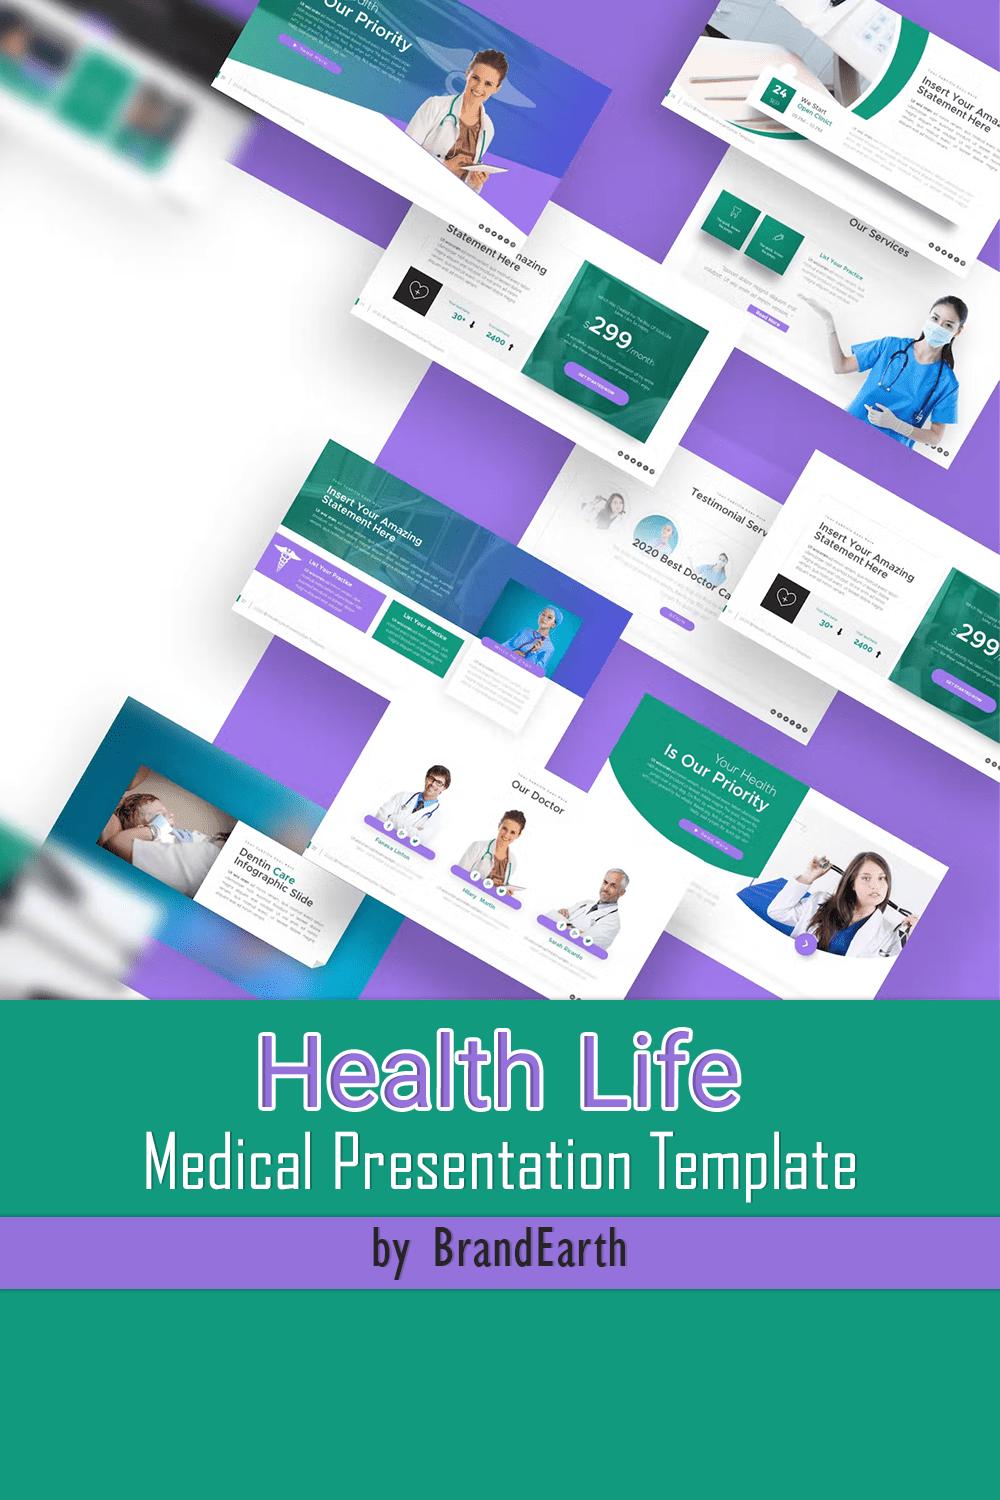 Health Life Medical Presentation Template - Pinterest.